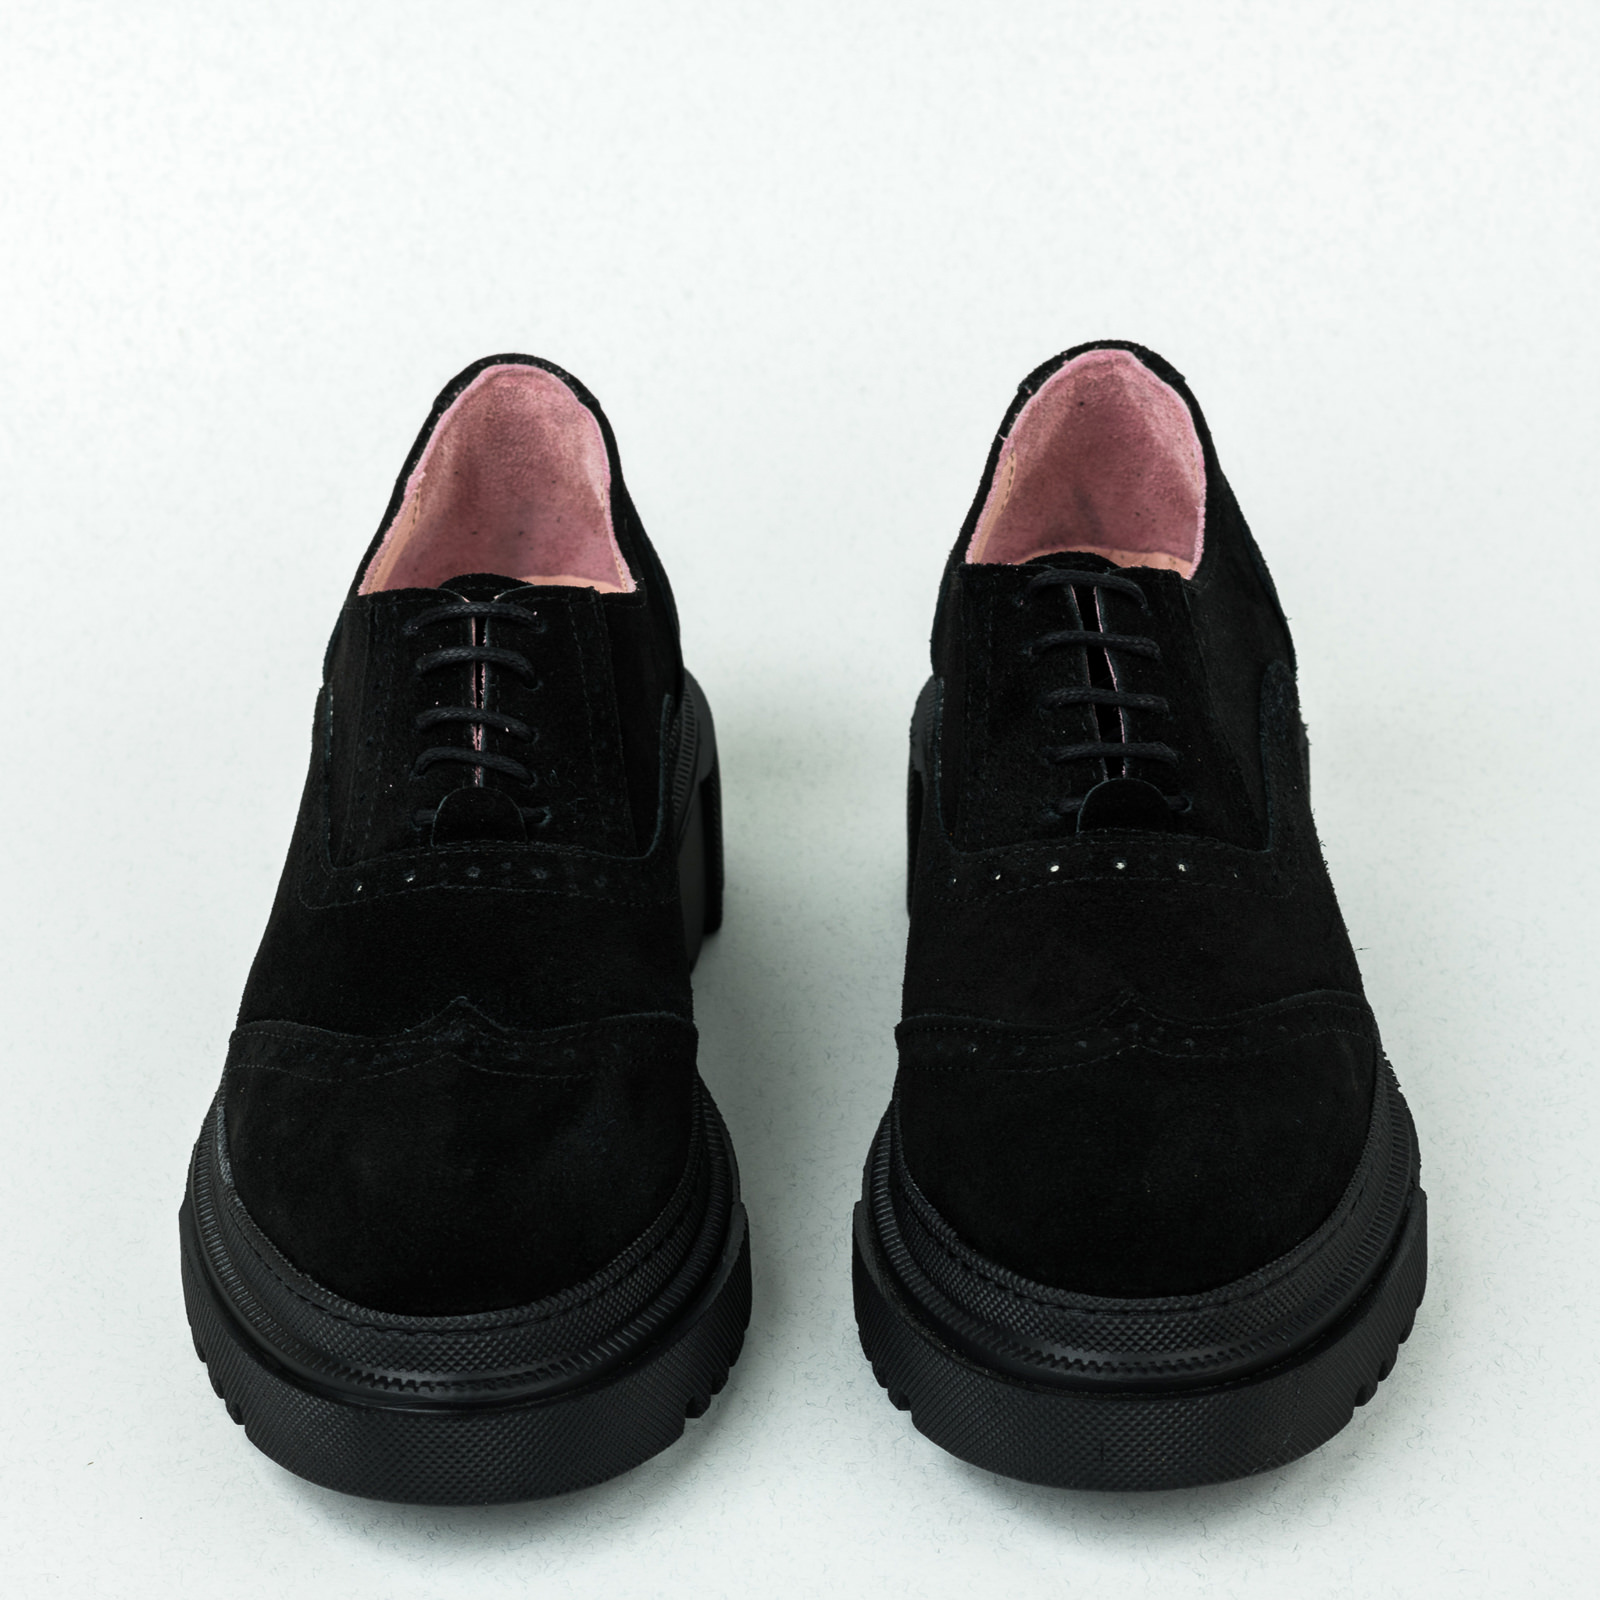 Leather shoes & flats B034 - BLACK